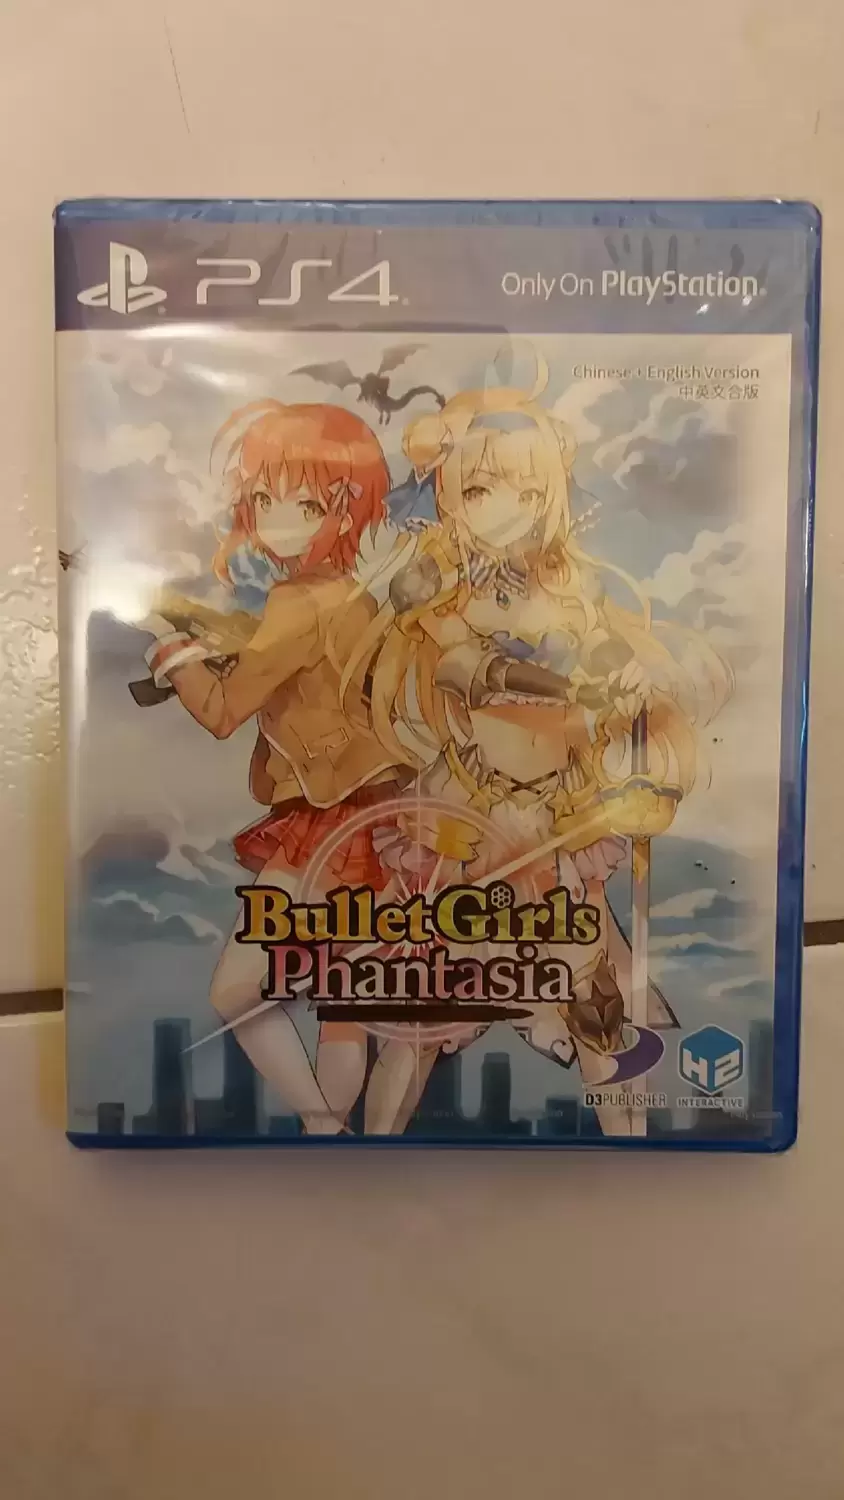 PS4 Games - Bullet Girls Phantasia